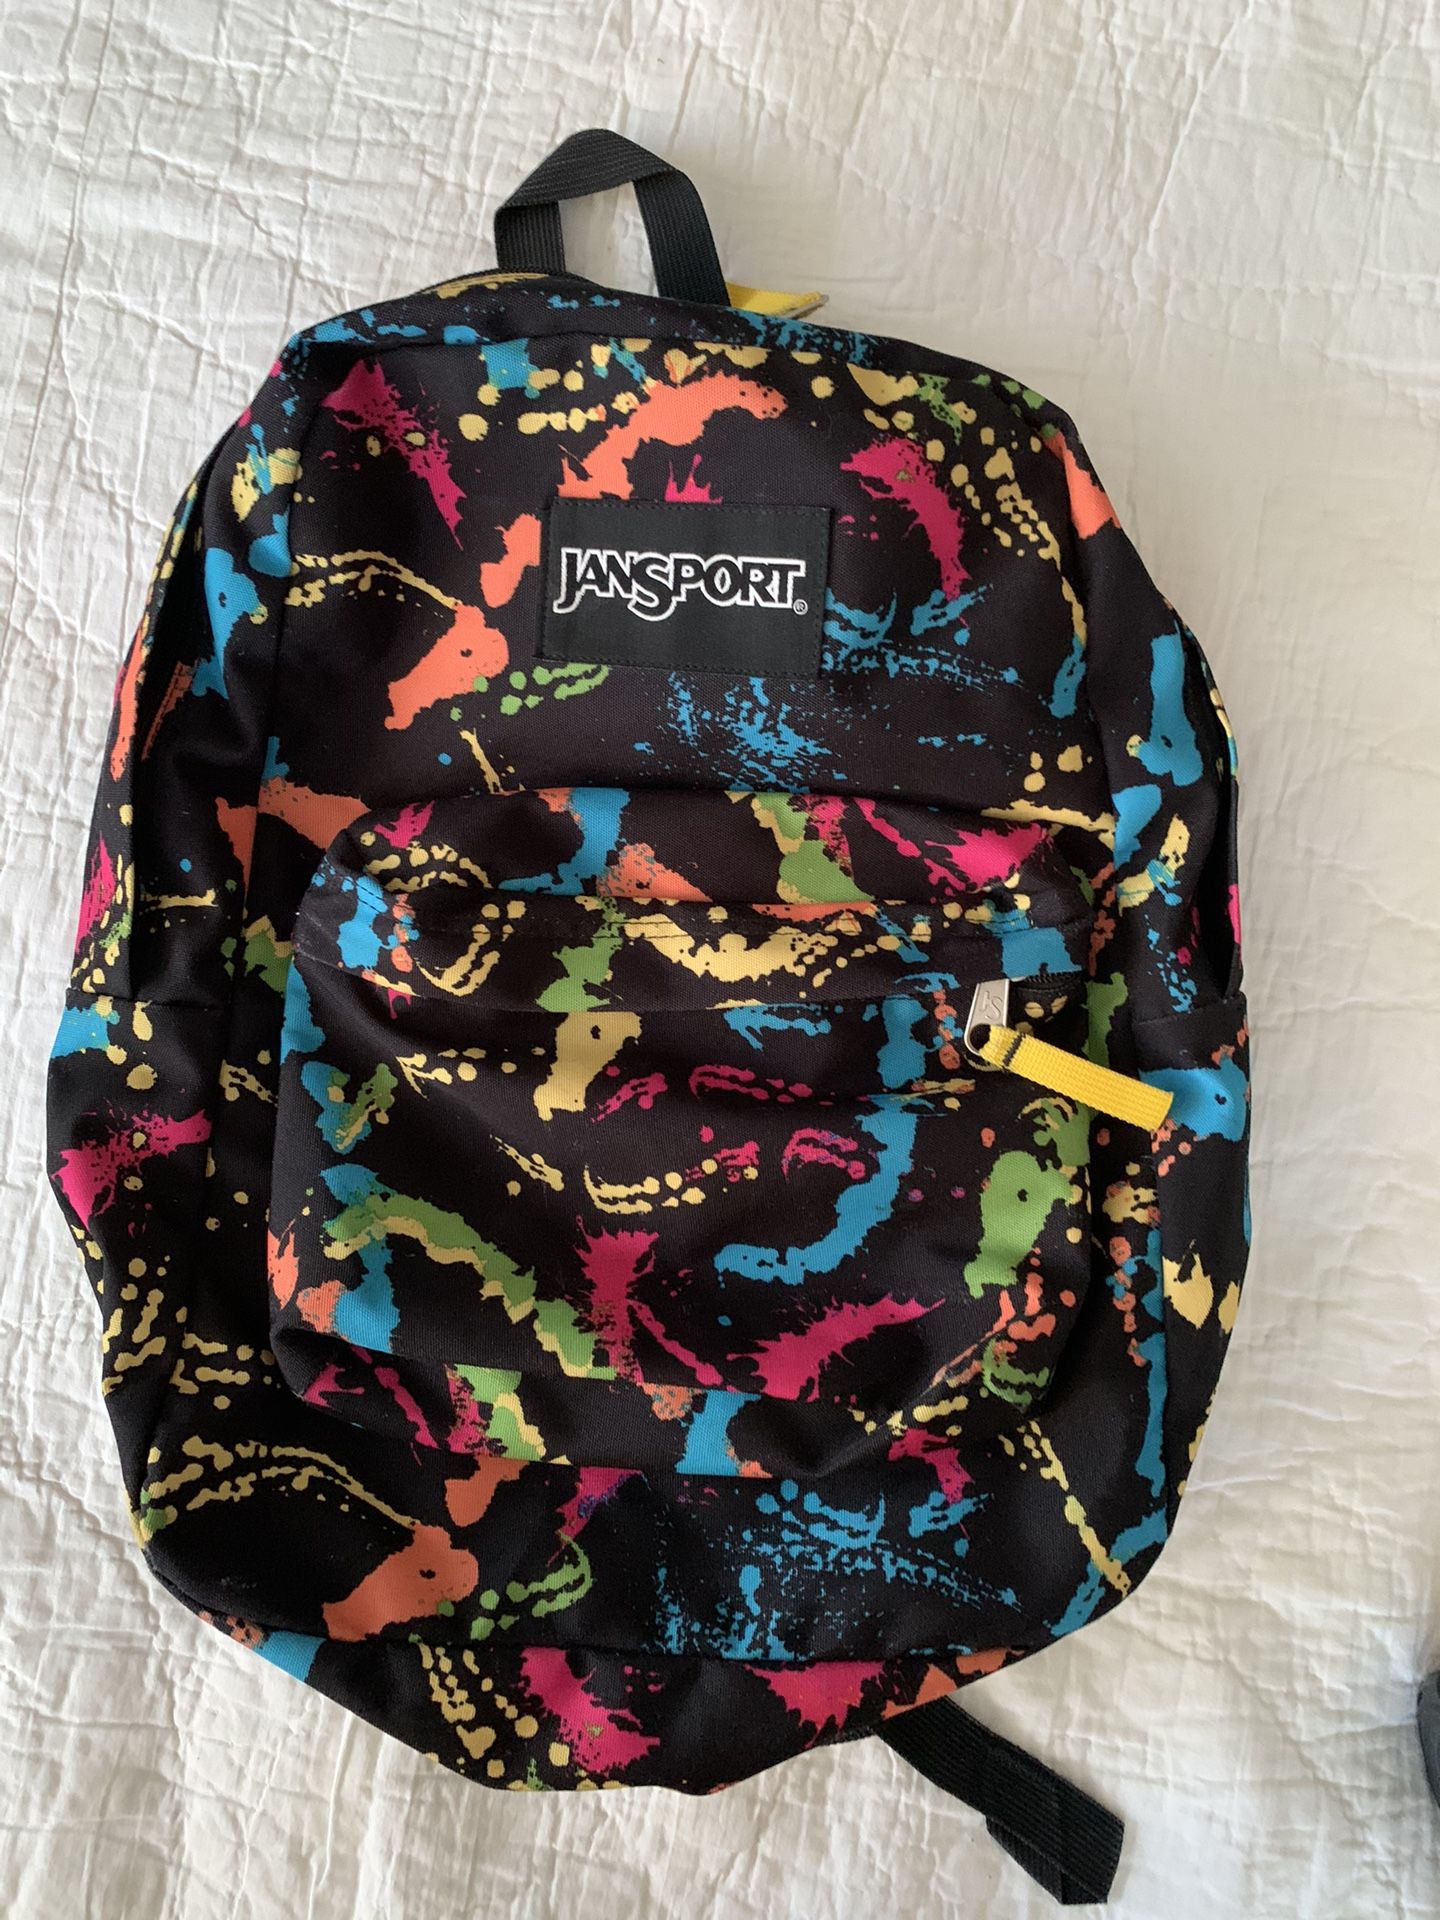 Jansport Superbreak One Backpack School Travel or Work, black with fun bright paint splotch pattern